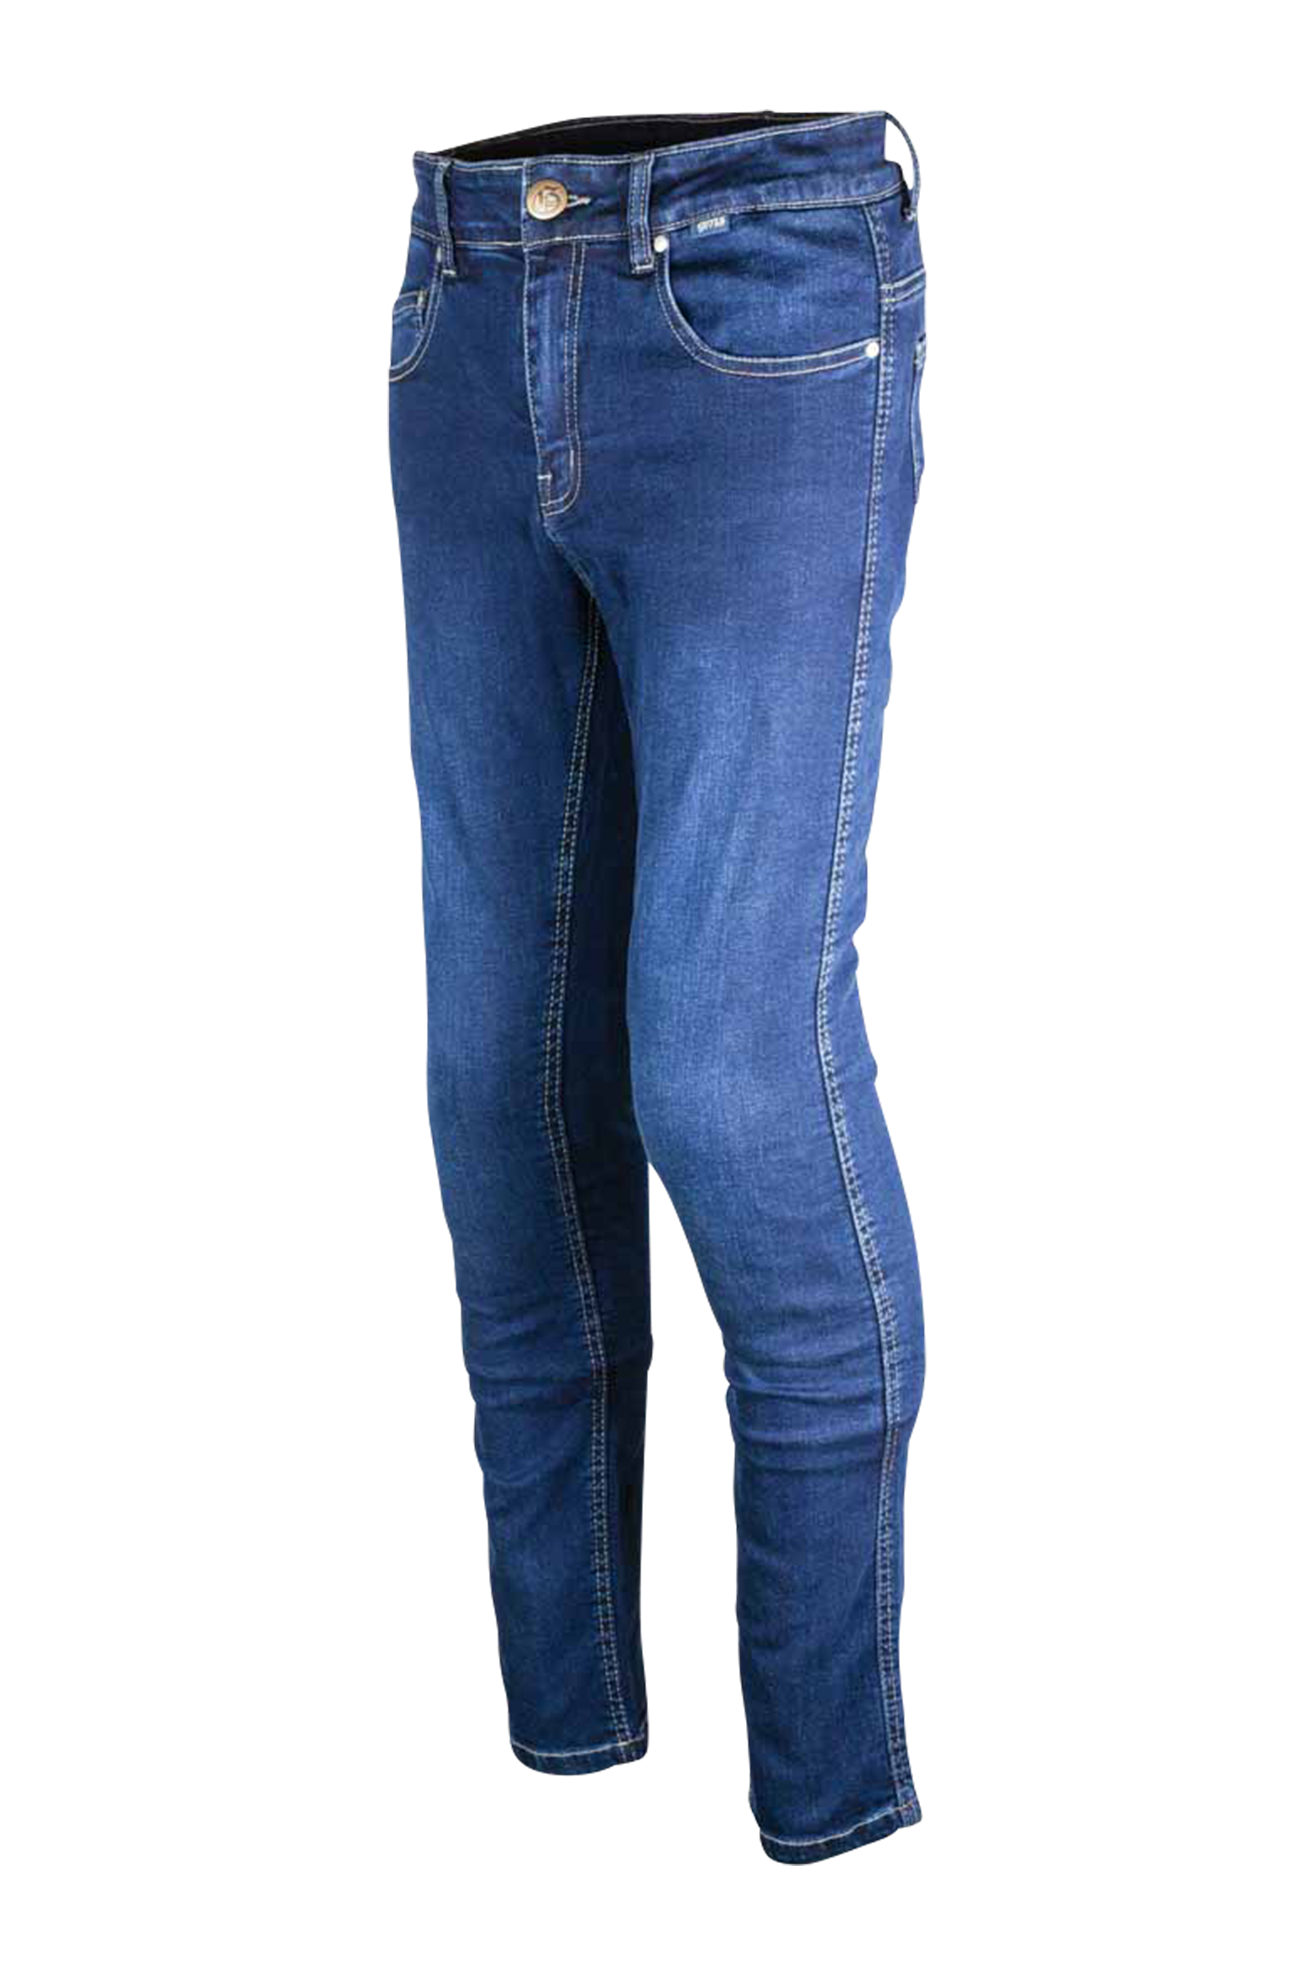 GMS Pantalones de Moto para Mujer  Rattle Azul Oscuro